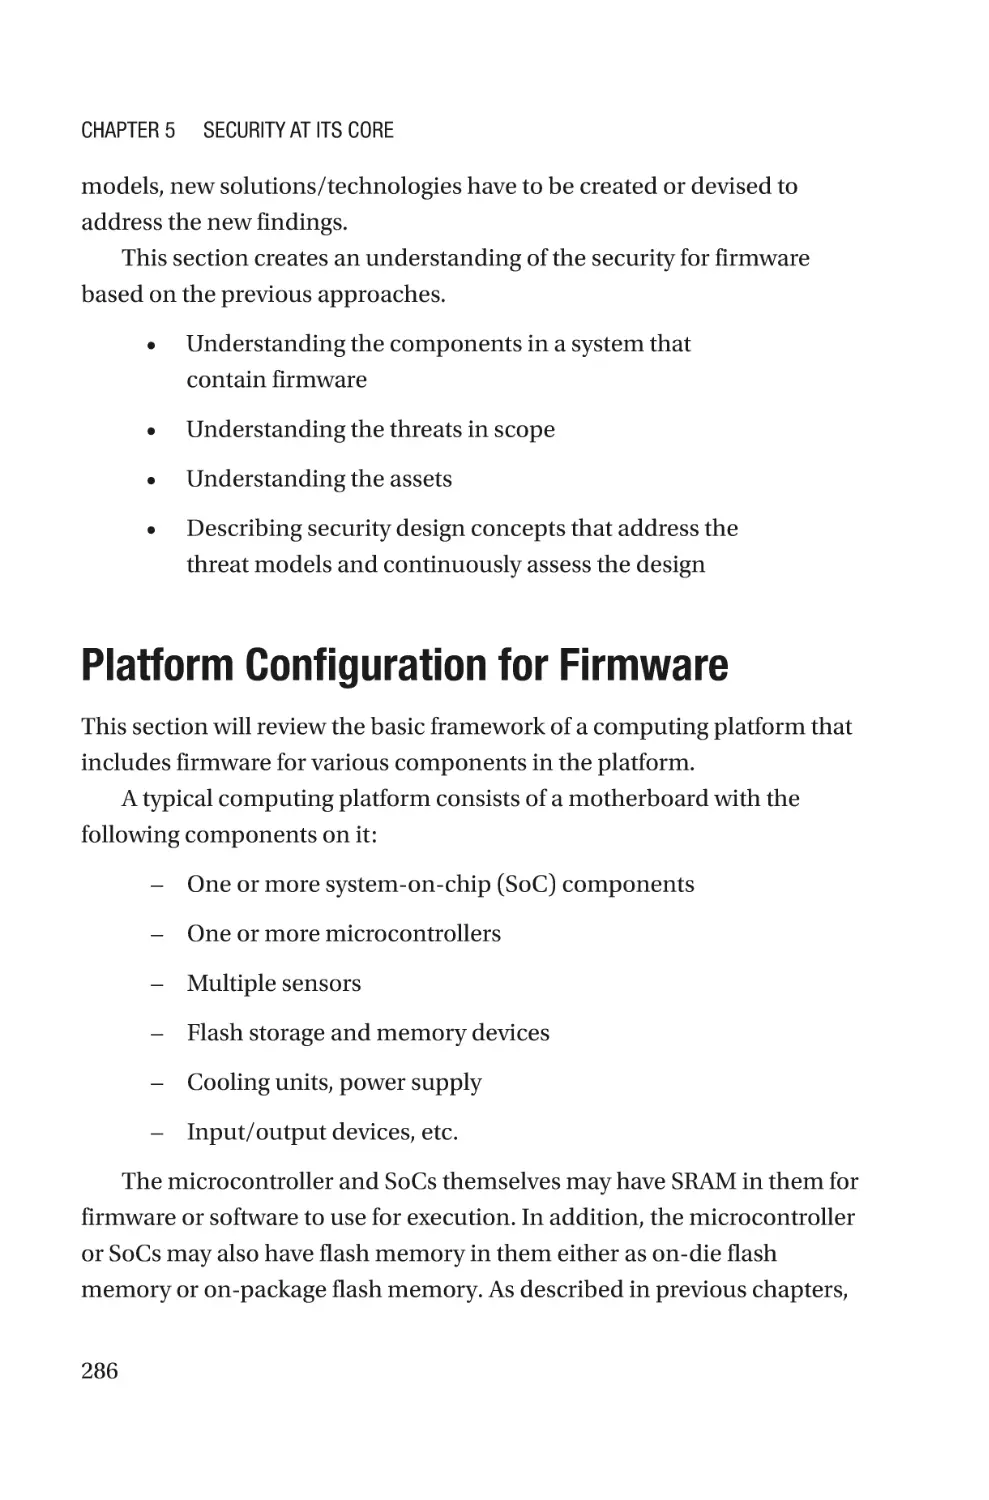 Platform Configuration for Firmware